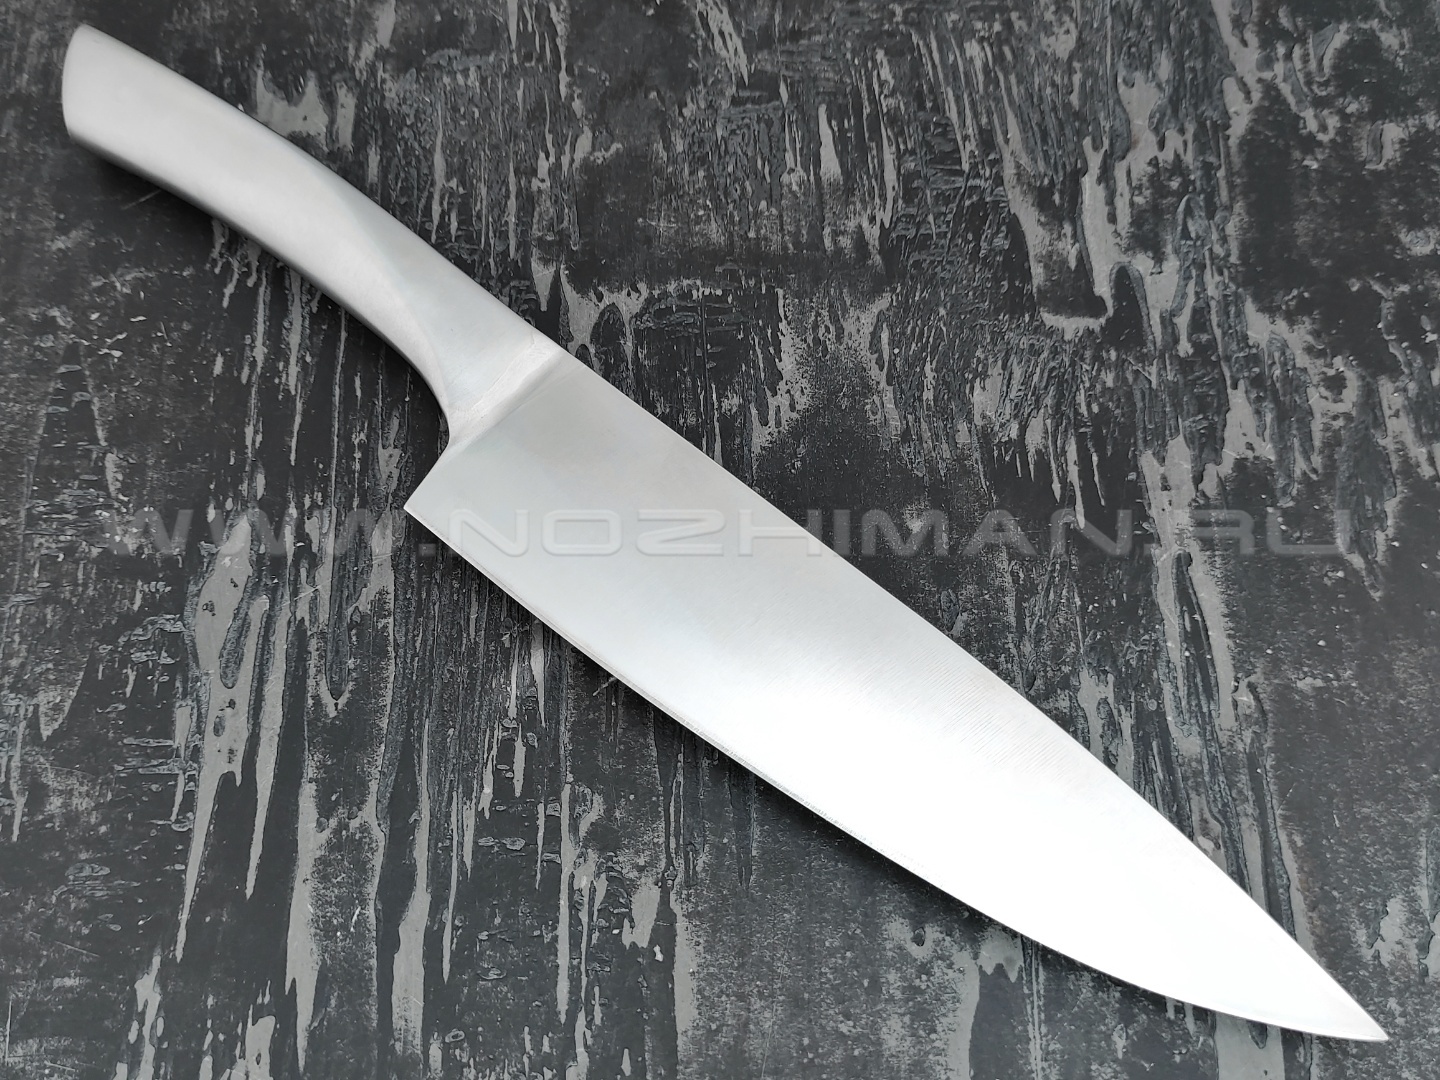 QXF шеф нож R-4428 сталь 40Cr14, рукоять сталь